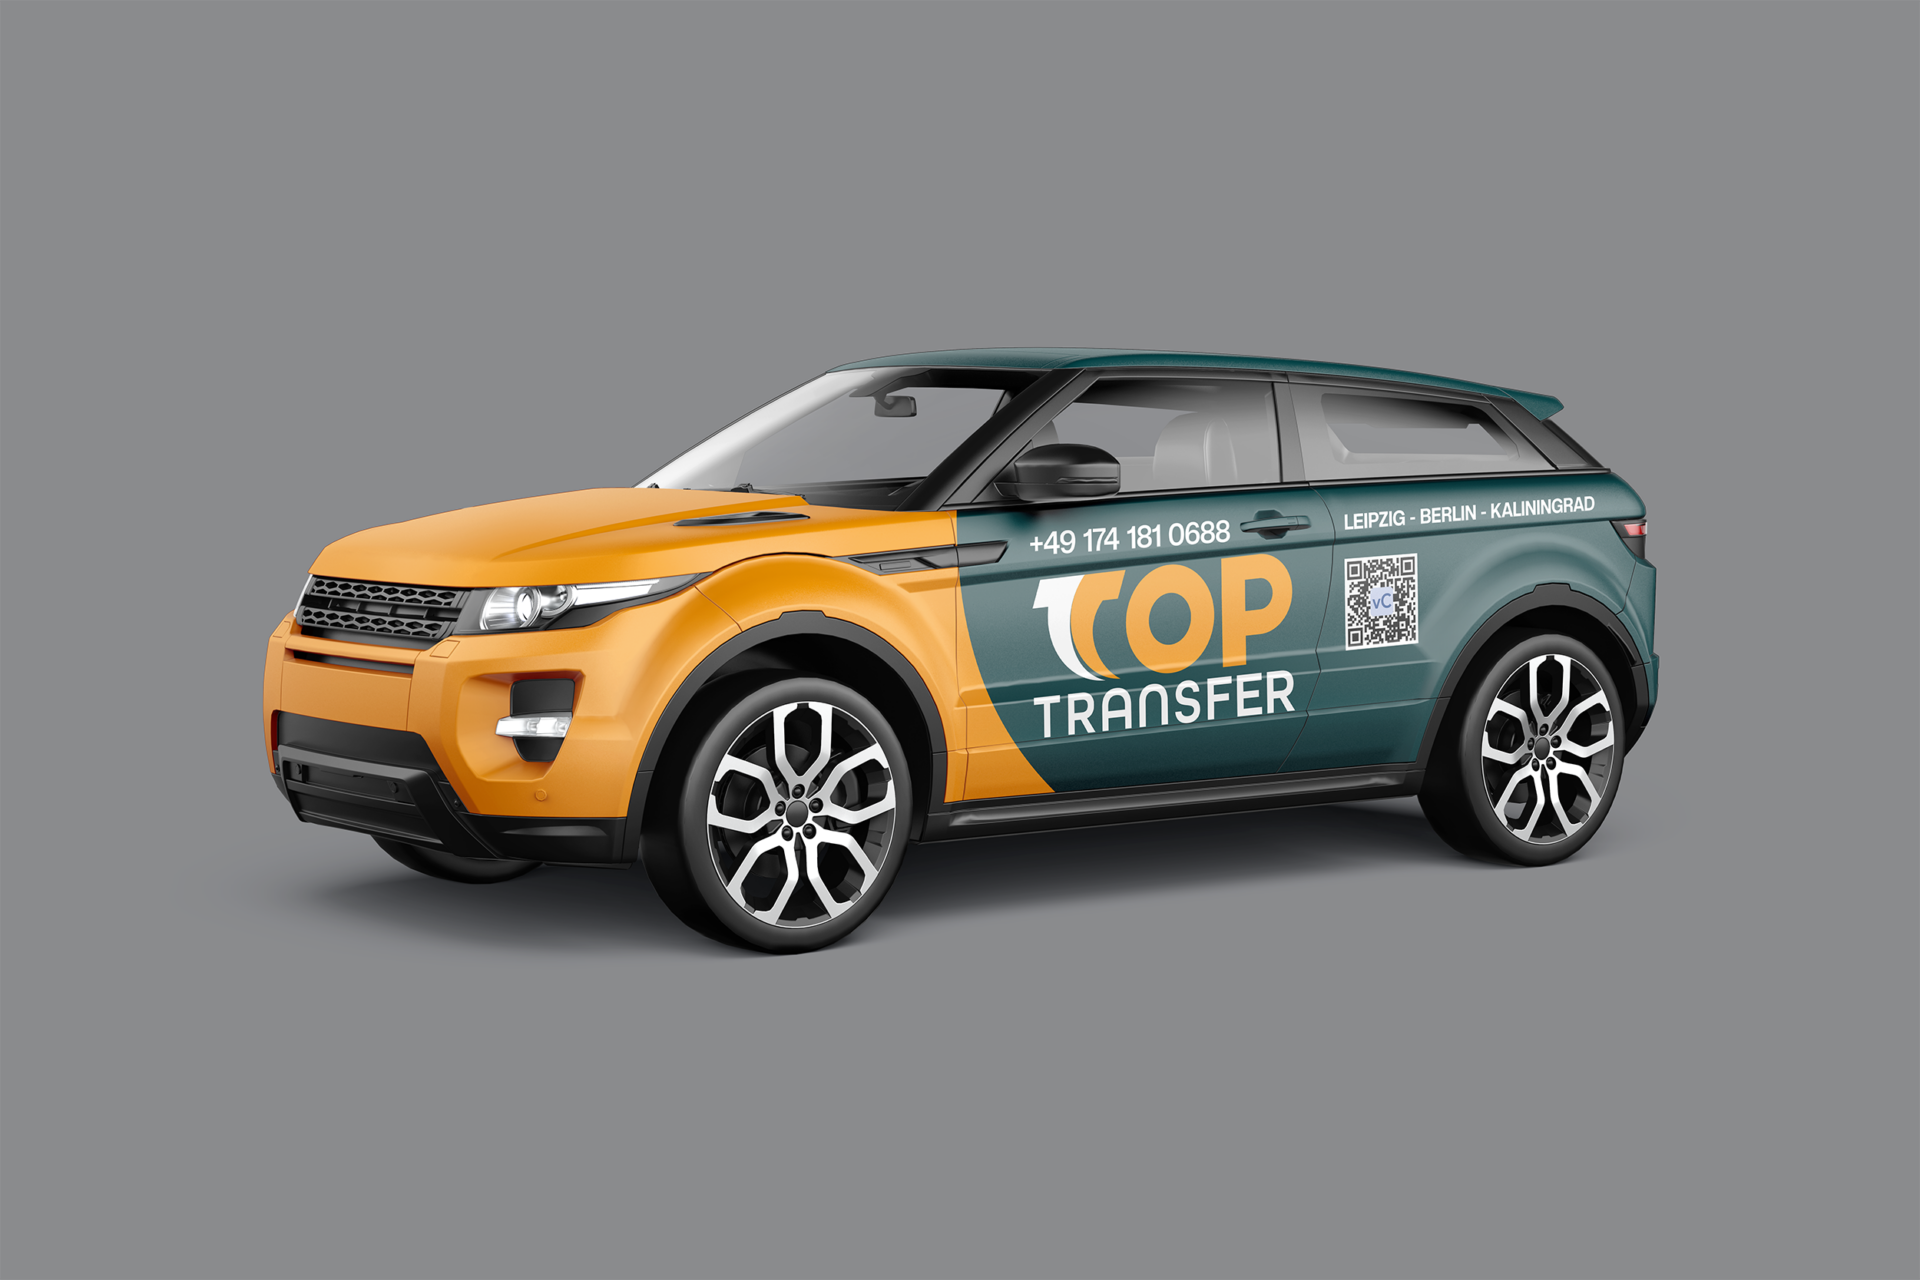 Portfolio Logodesign TopTransfer Crossover Van Fahrzeugbeschriftung